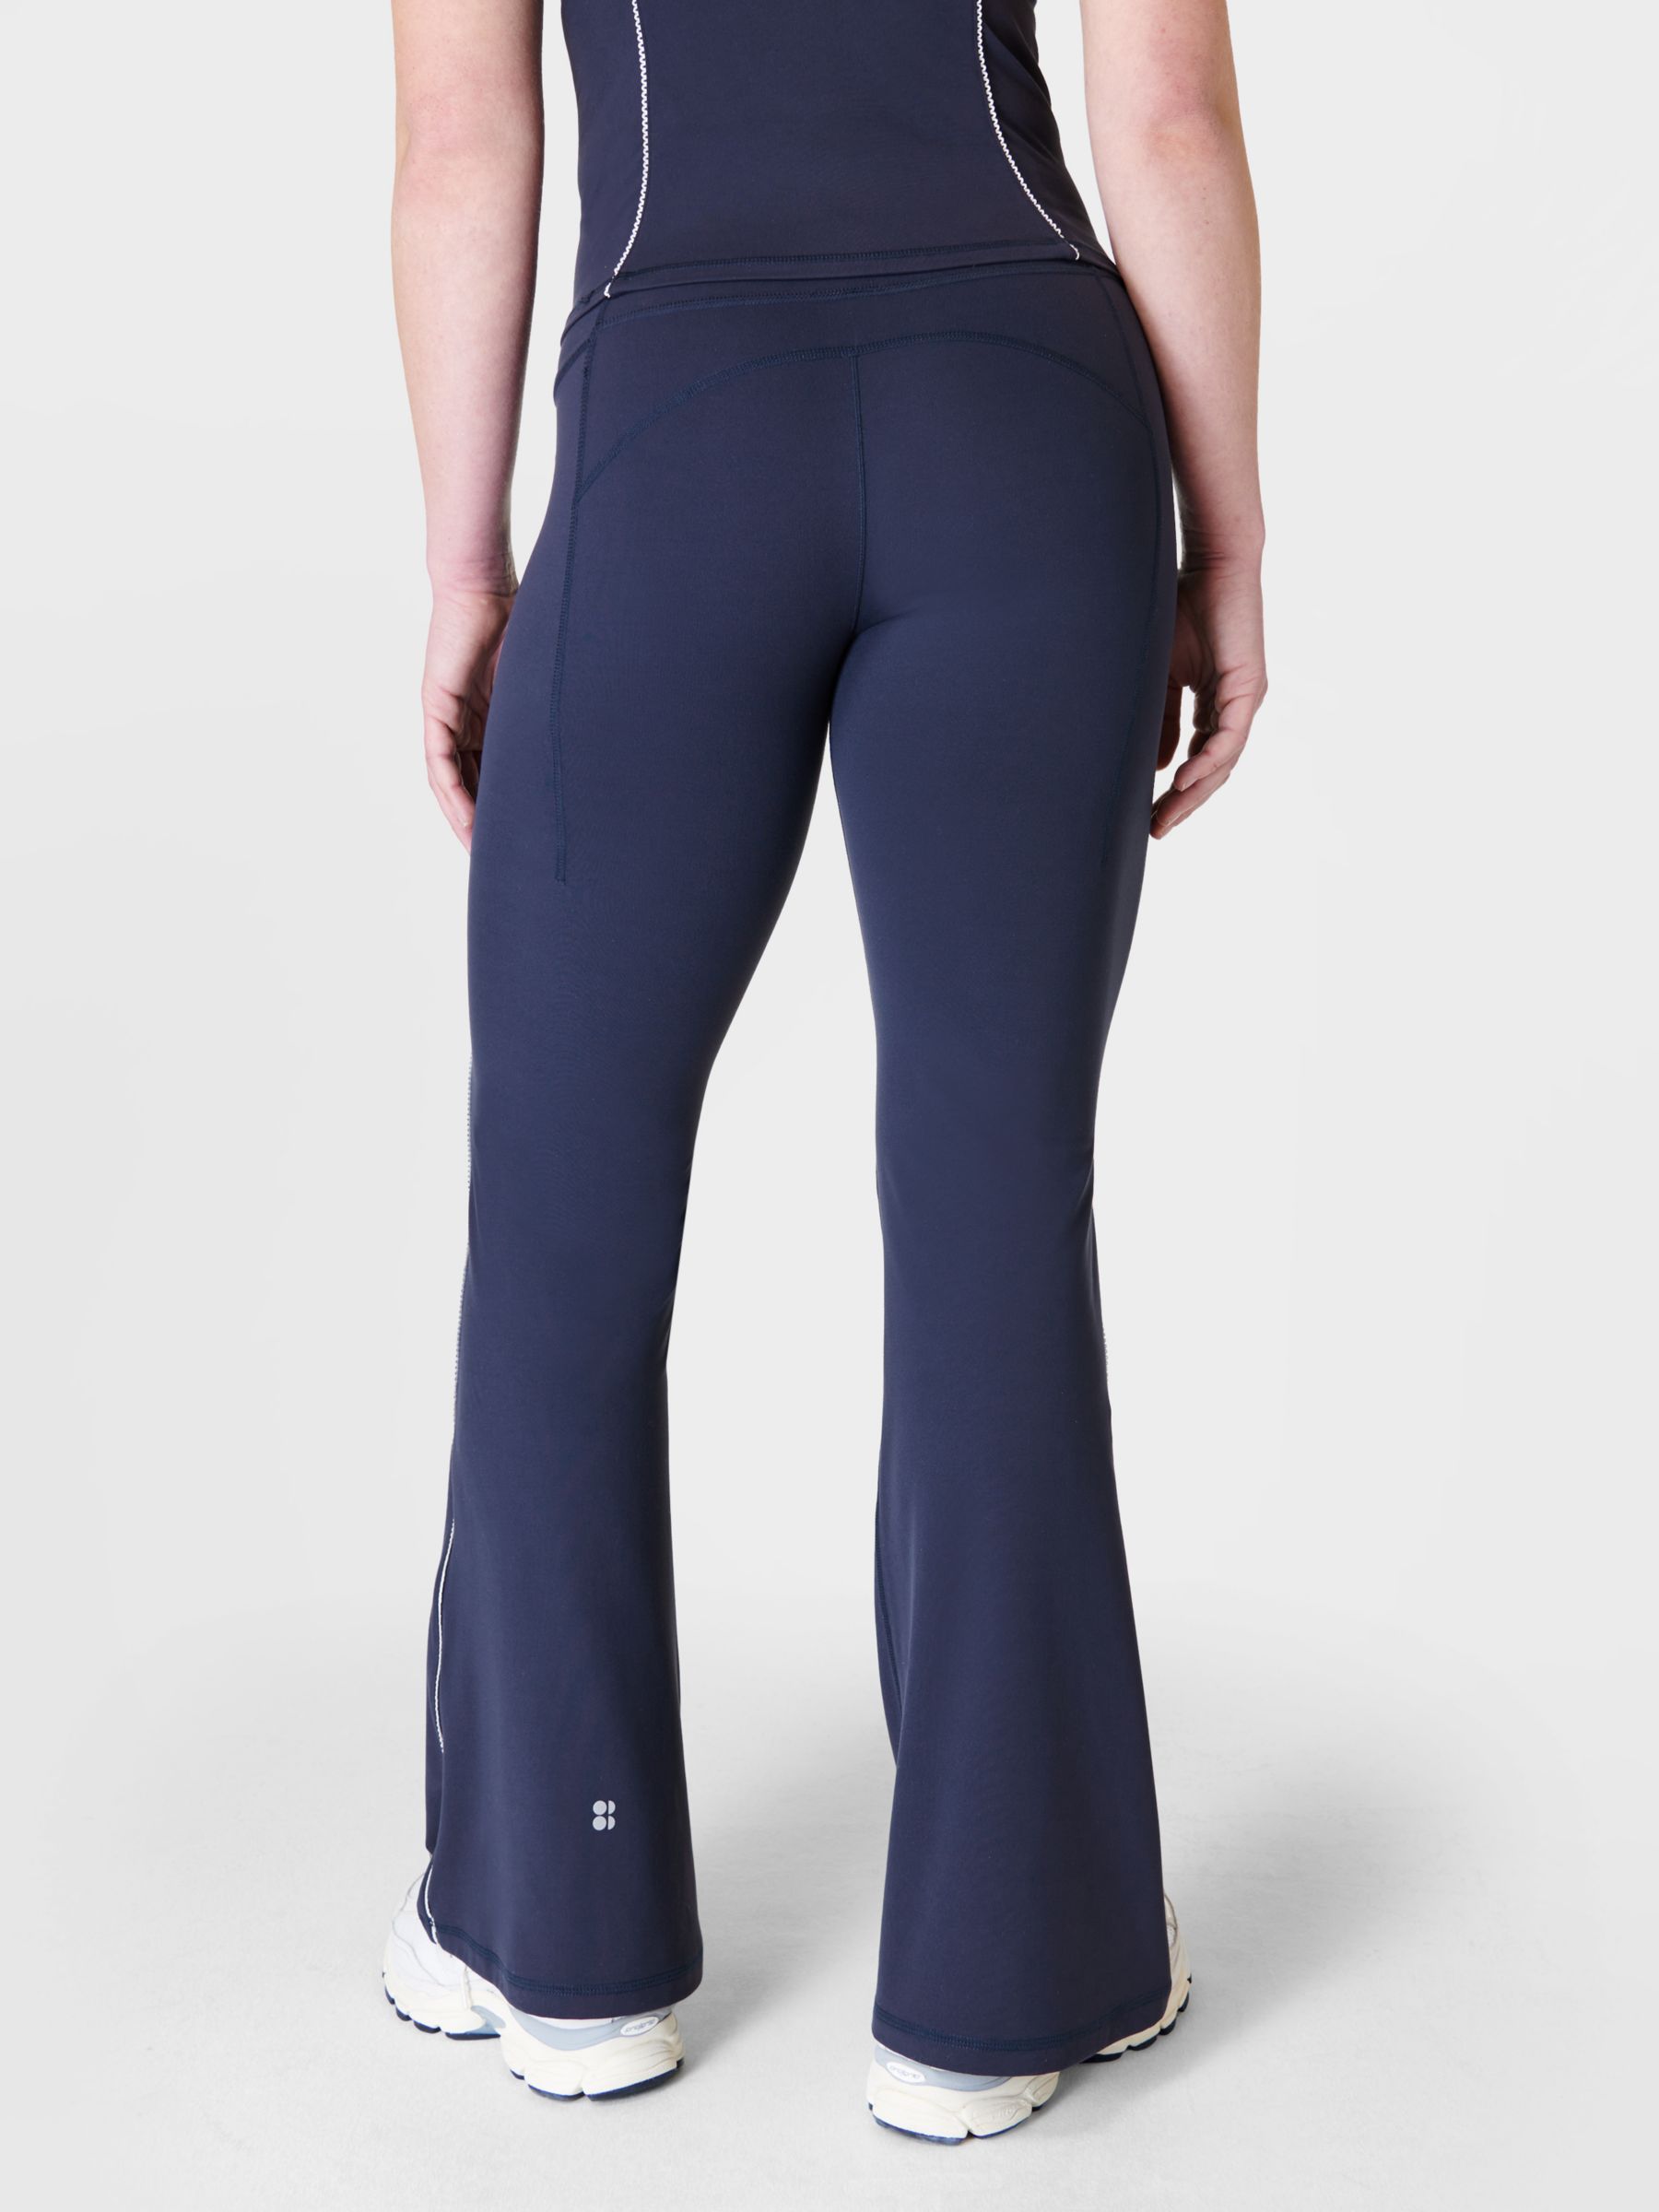 Sweaty Betty Picot Lace Flared Trousers, Navy Blue, XS